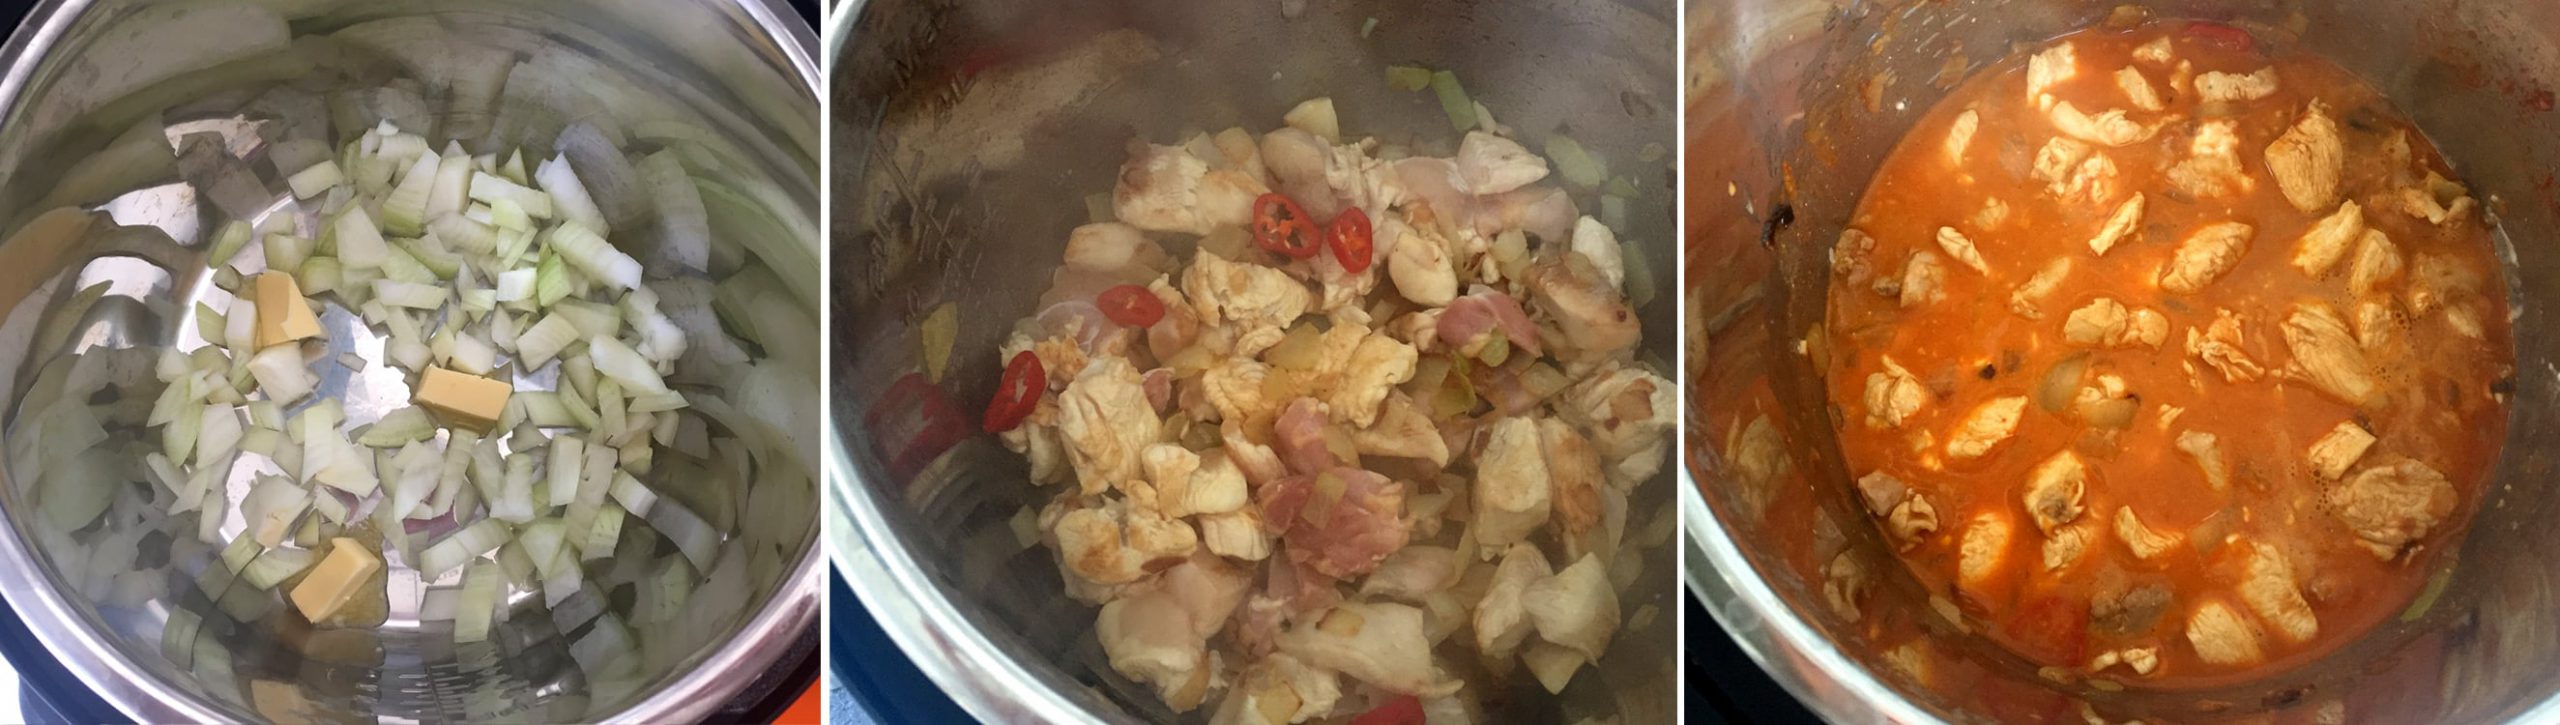 Making instant pot chicken paprika